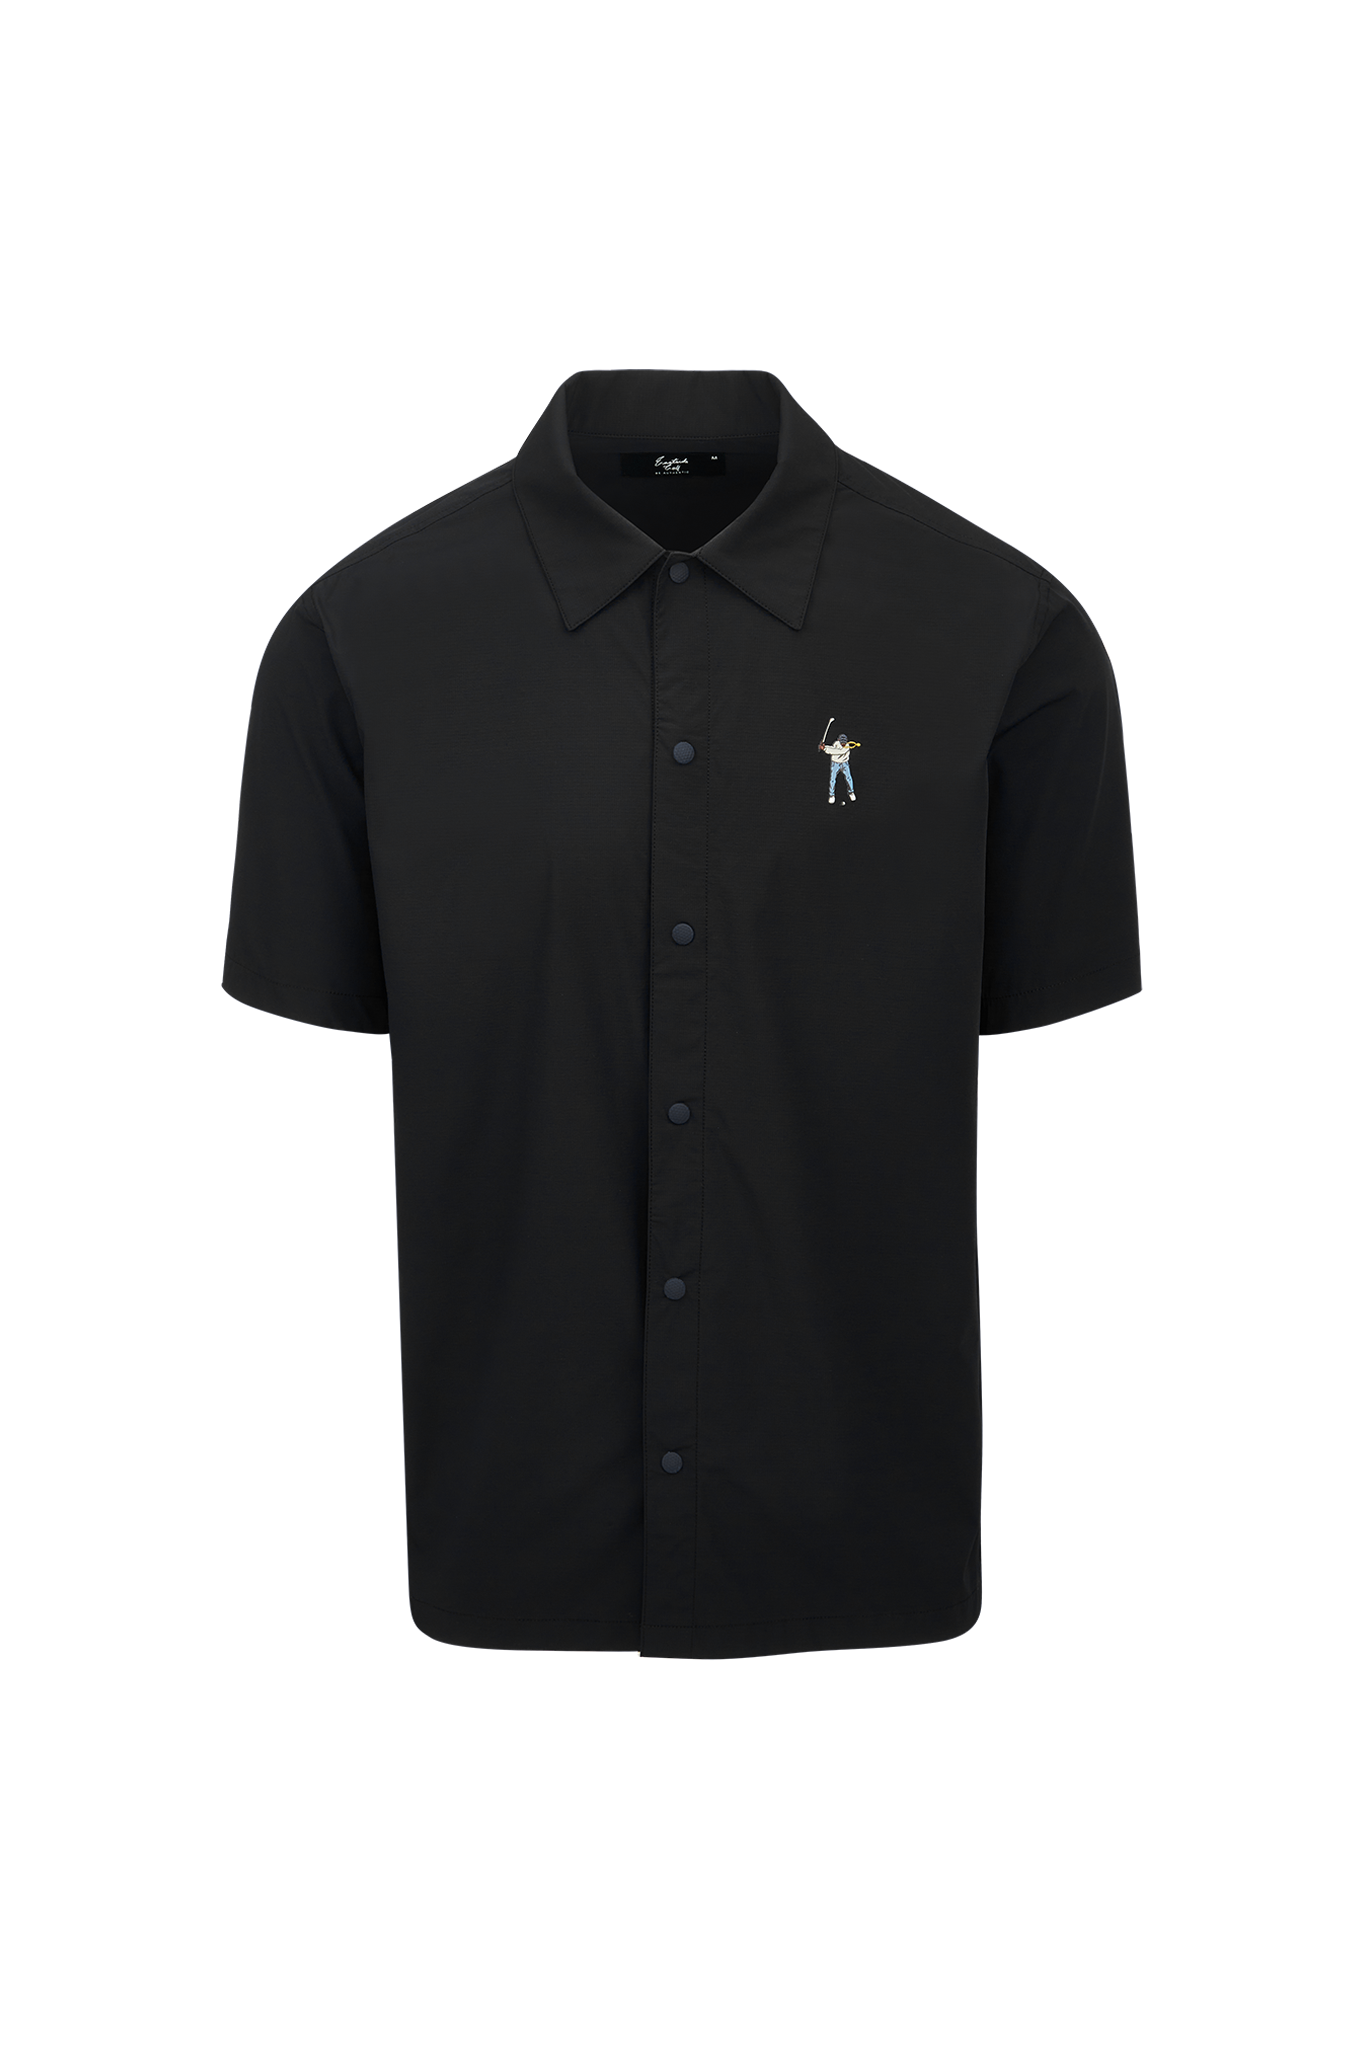 Black Eastside Golf Men's Micro Rip Stop Shirt